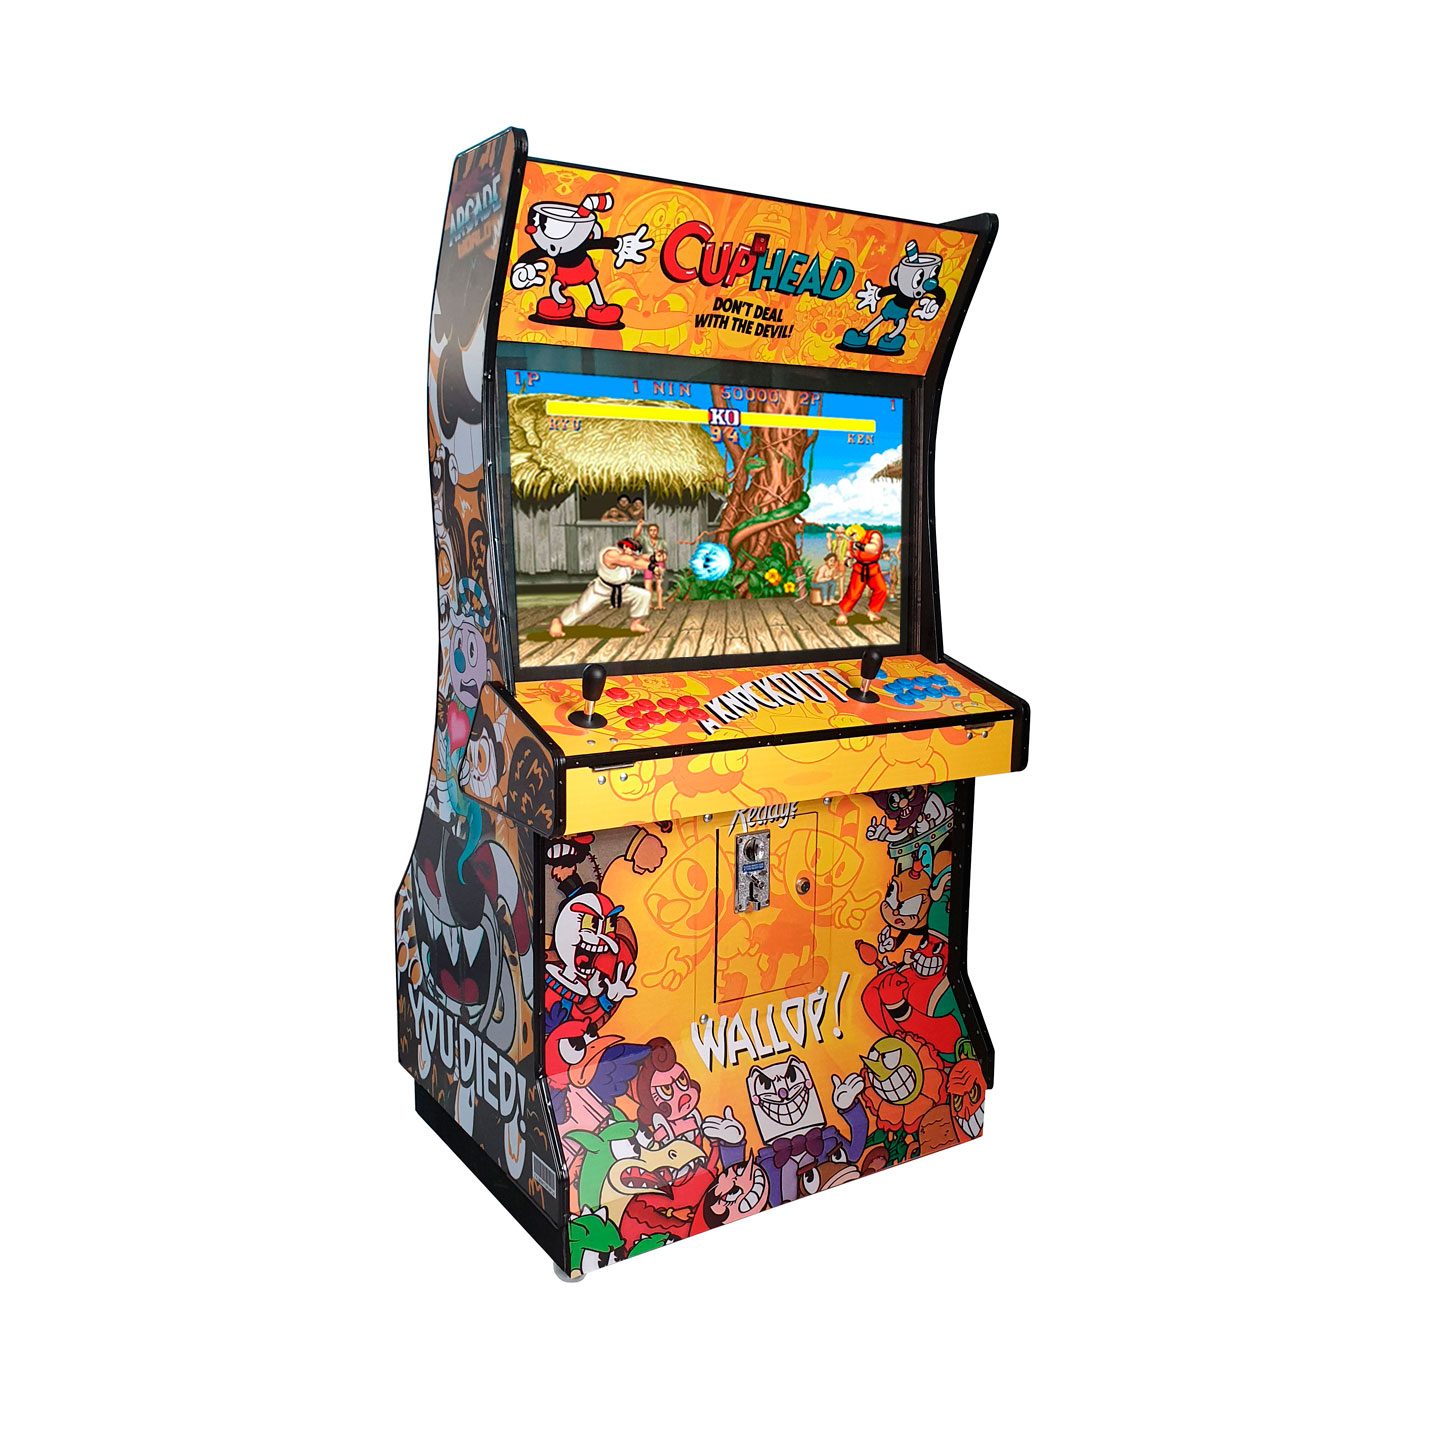 Maquinita Mini Cisne con banquito 32” Personalizable Multijuegos Arcade Pandora